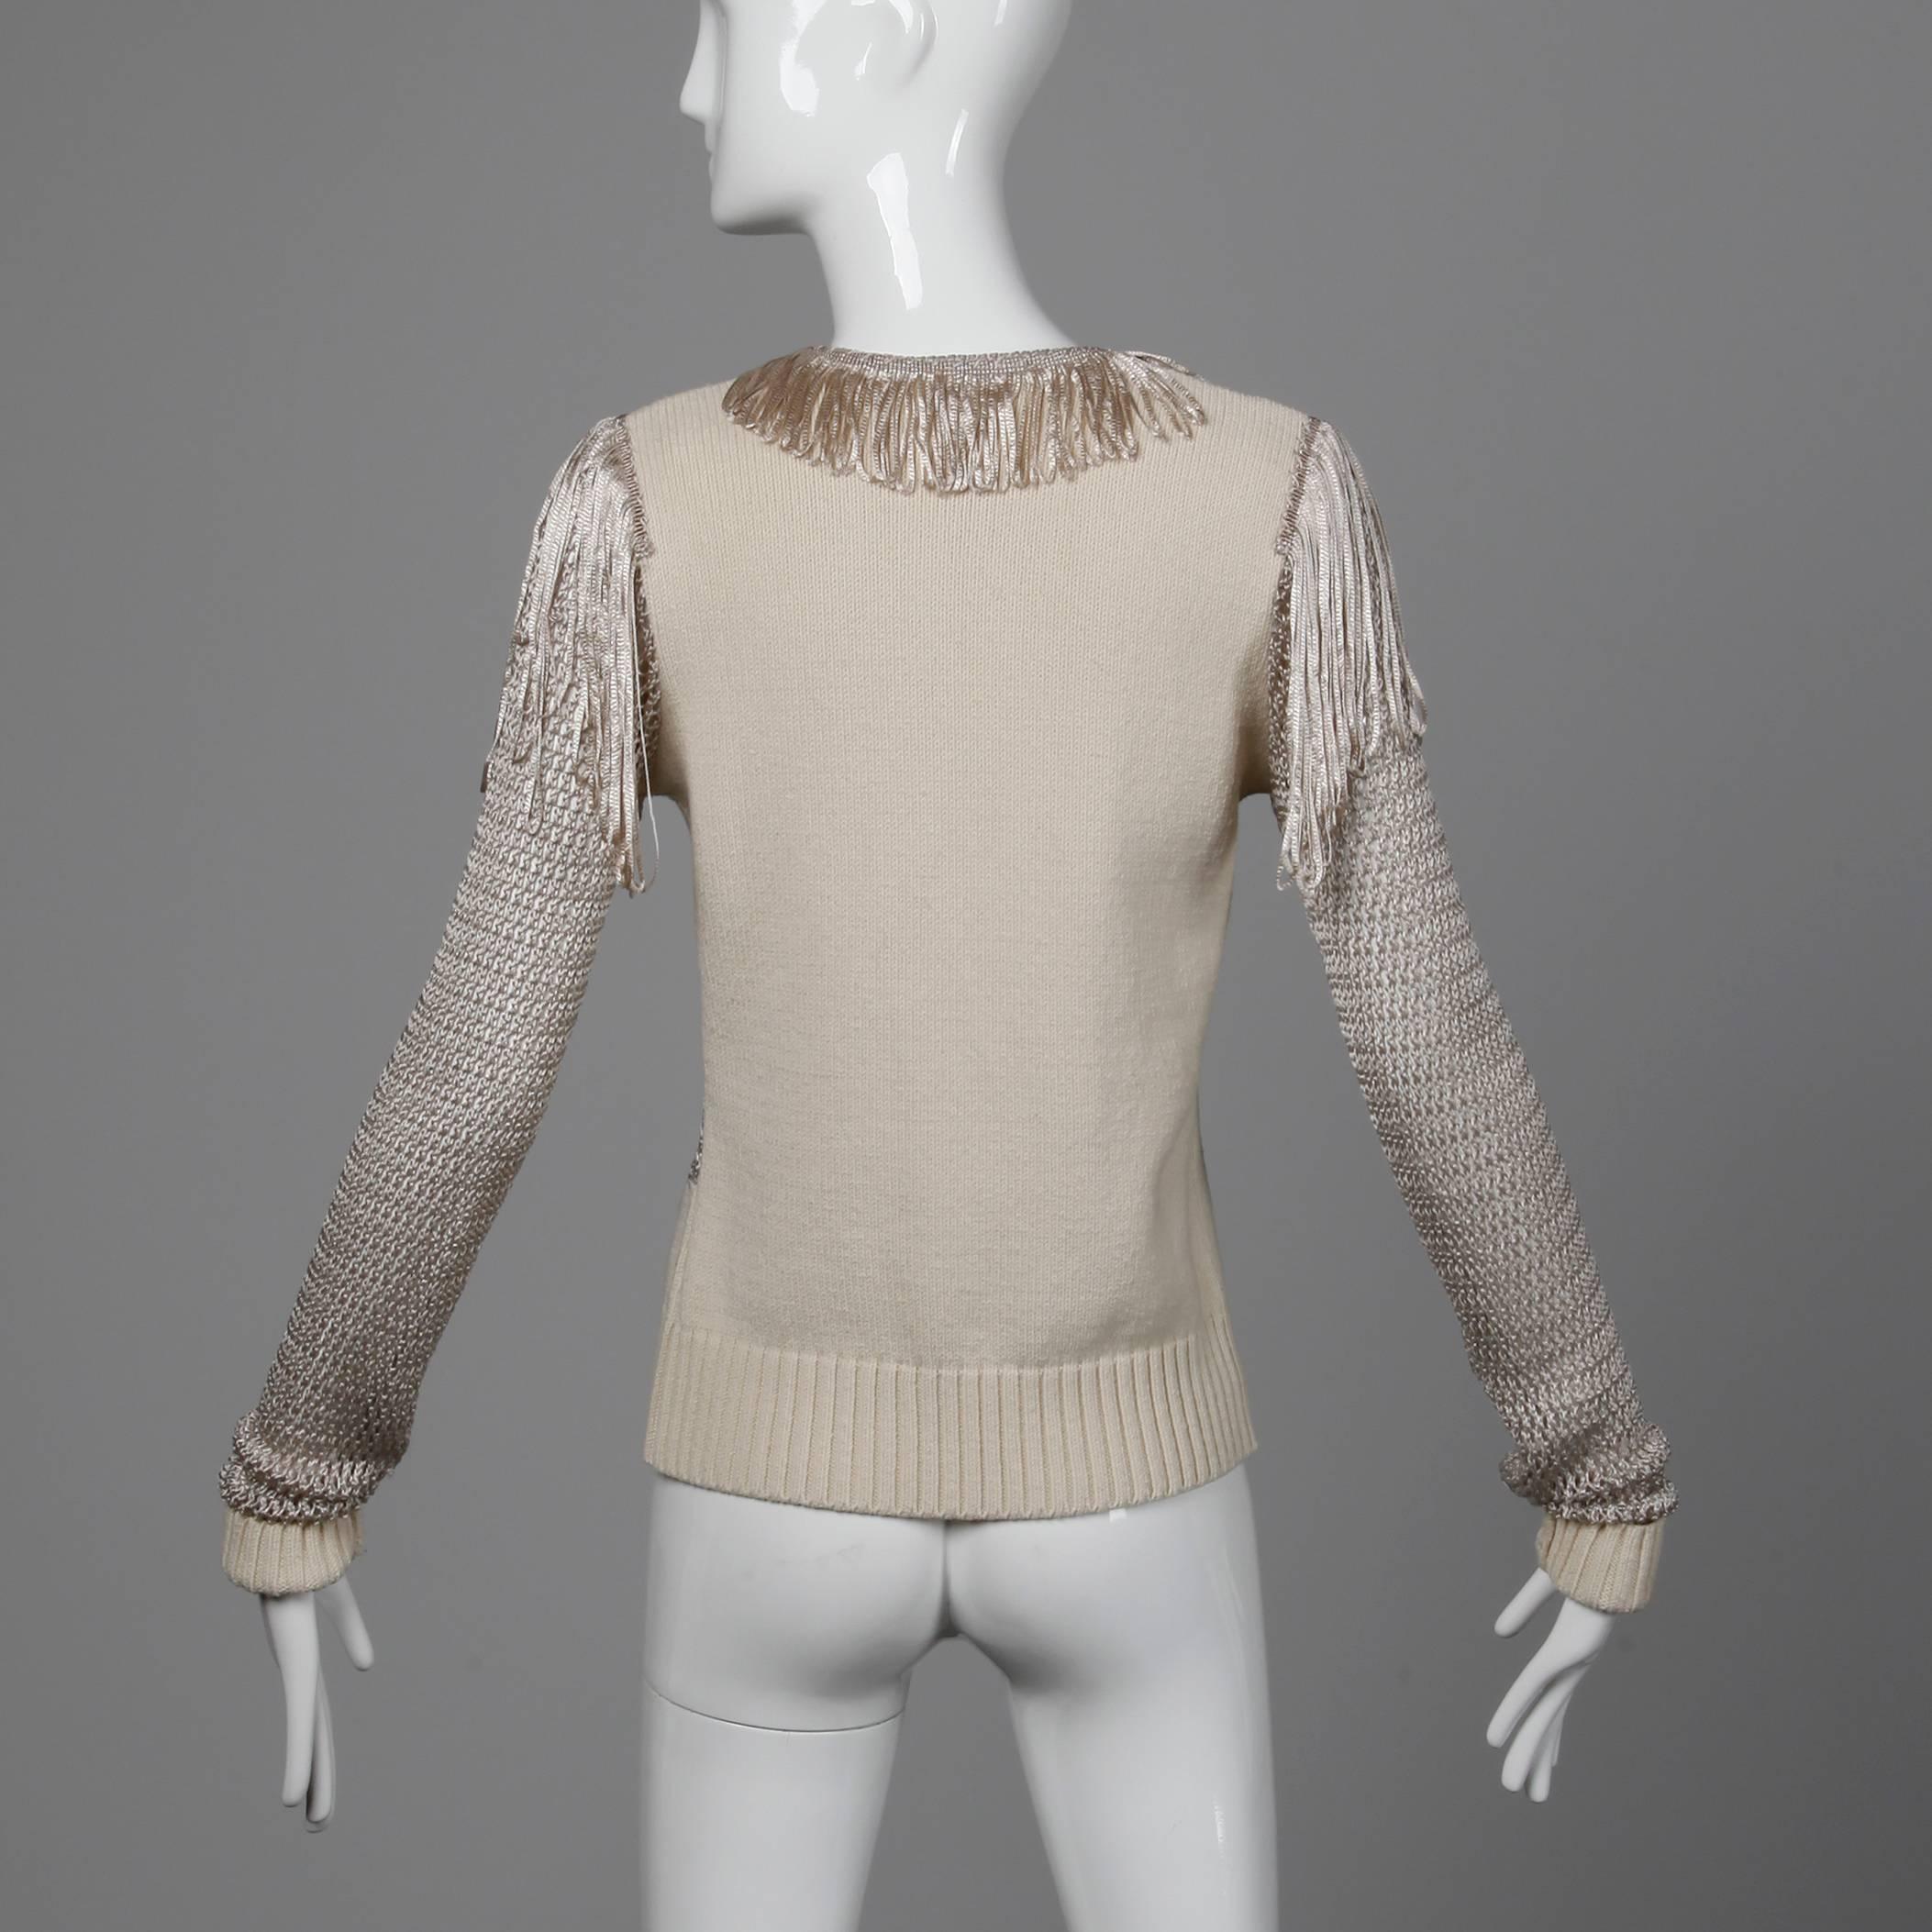 Women's or Men's Christian Lacroix Knit + Crochet Fringe Cardigan Sweater Jacket or Top